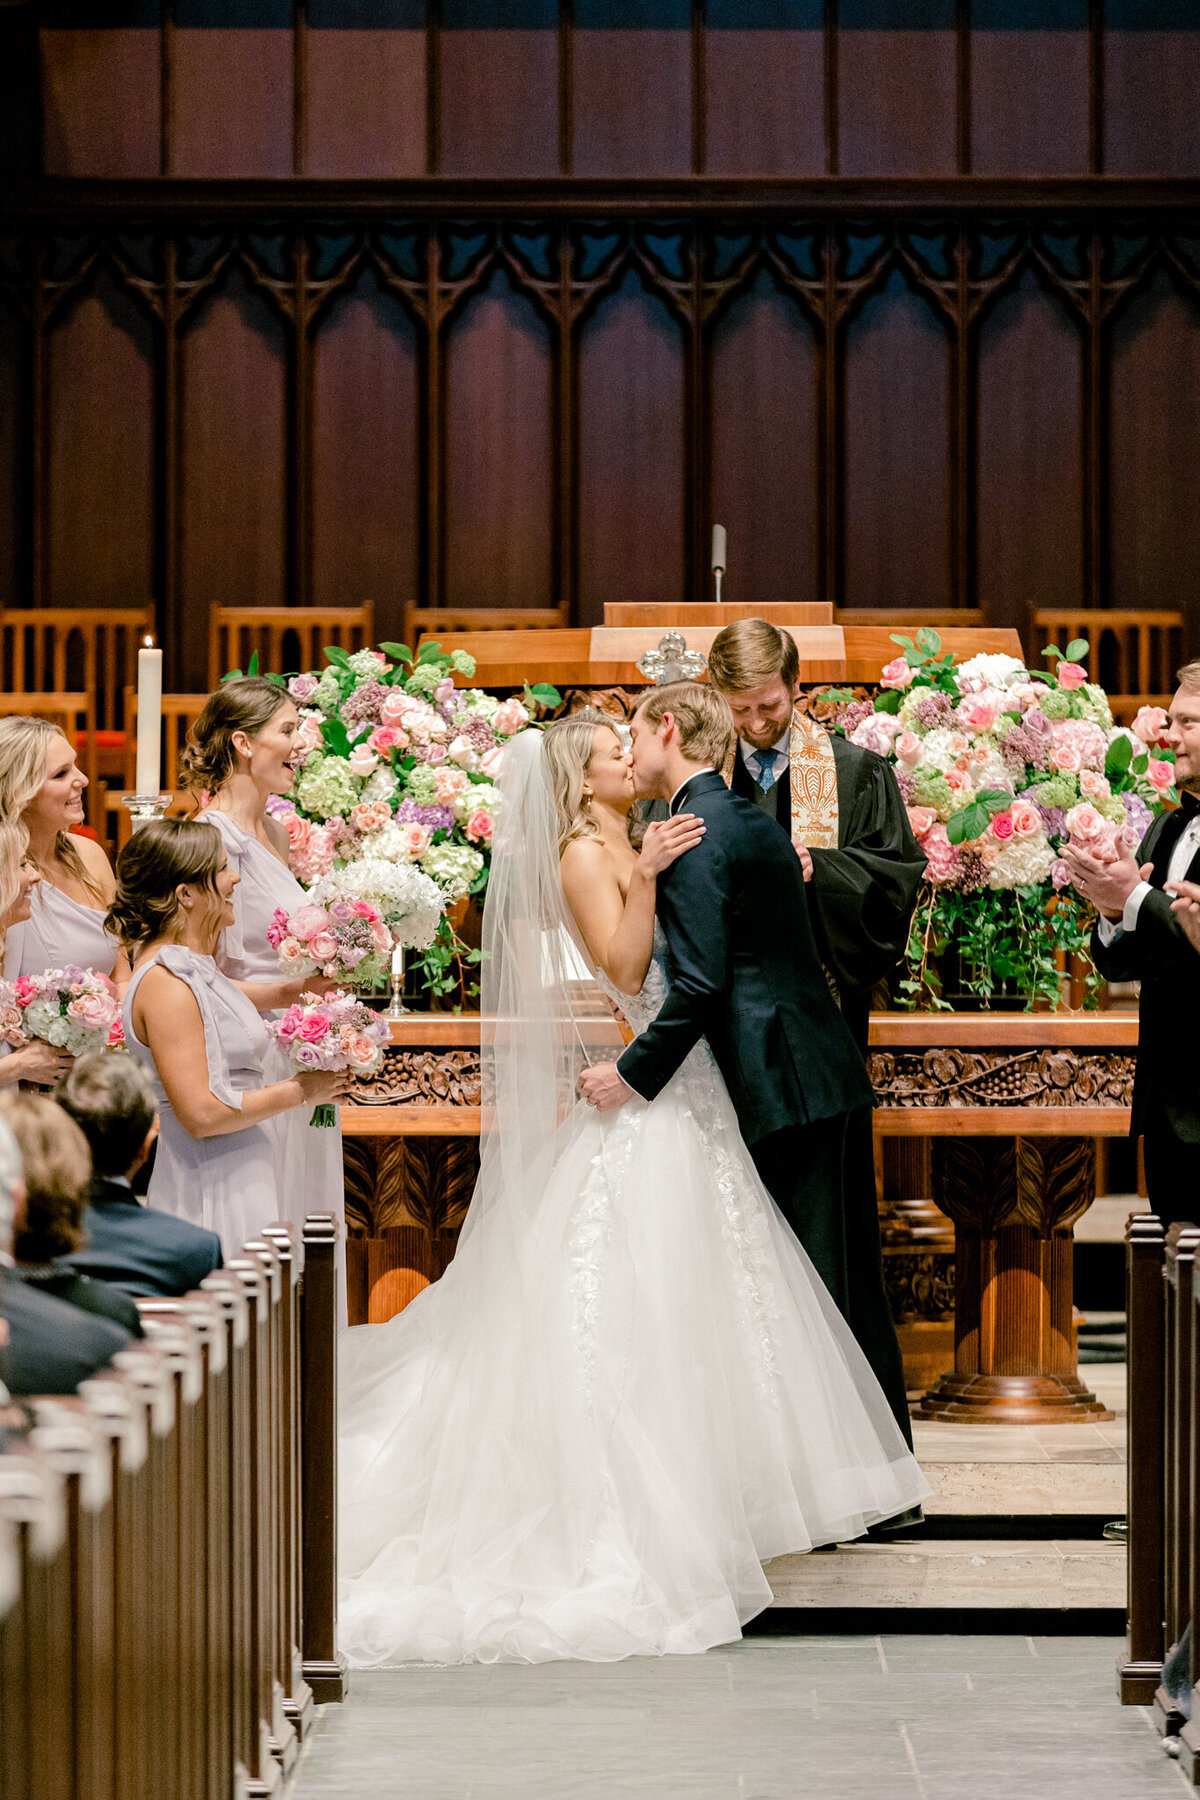 Shelby & Thomas's Wedding at HPUMC The Room on Main | Dallas Wedding Photographer | Sami Kathryn Photography-130